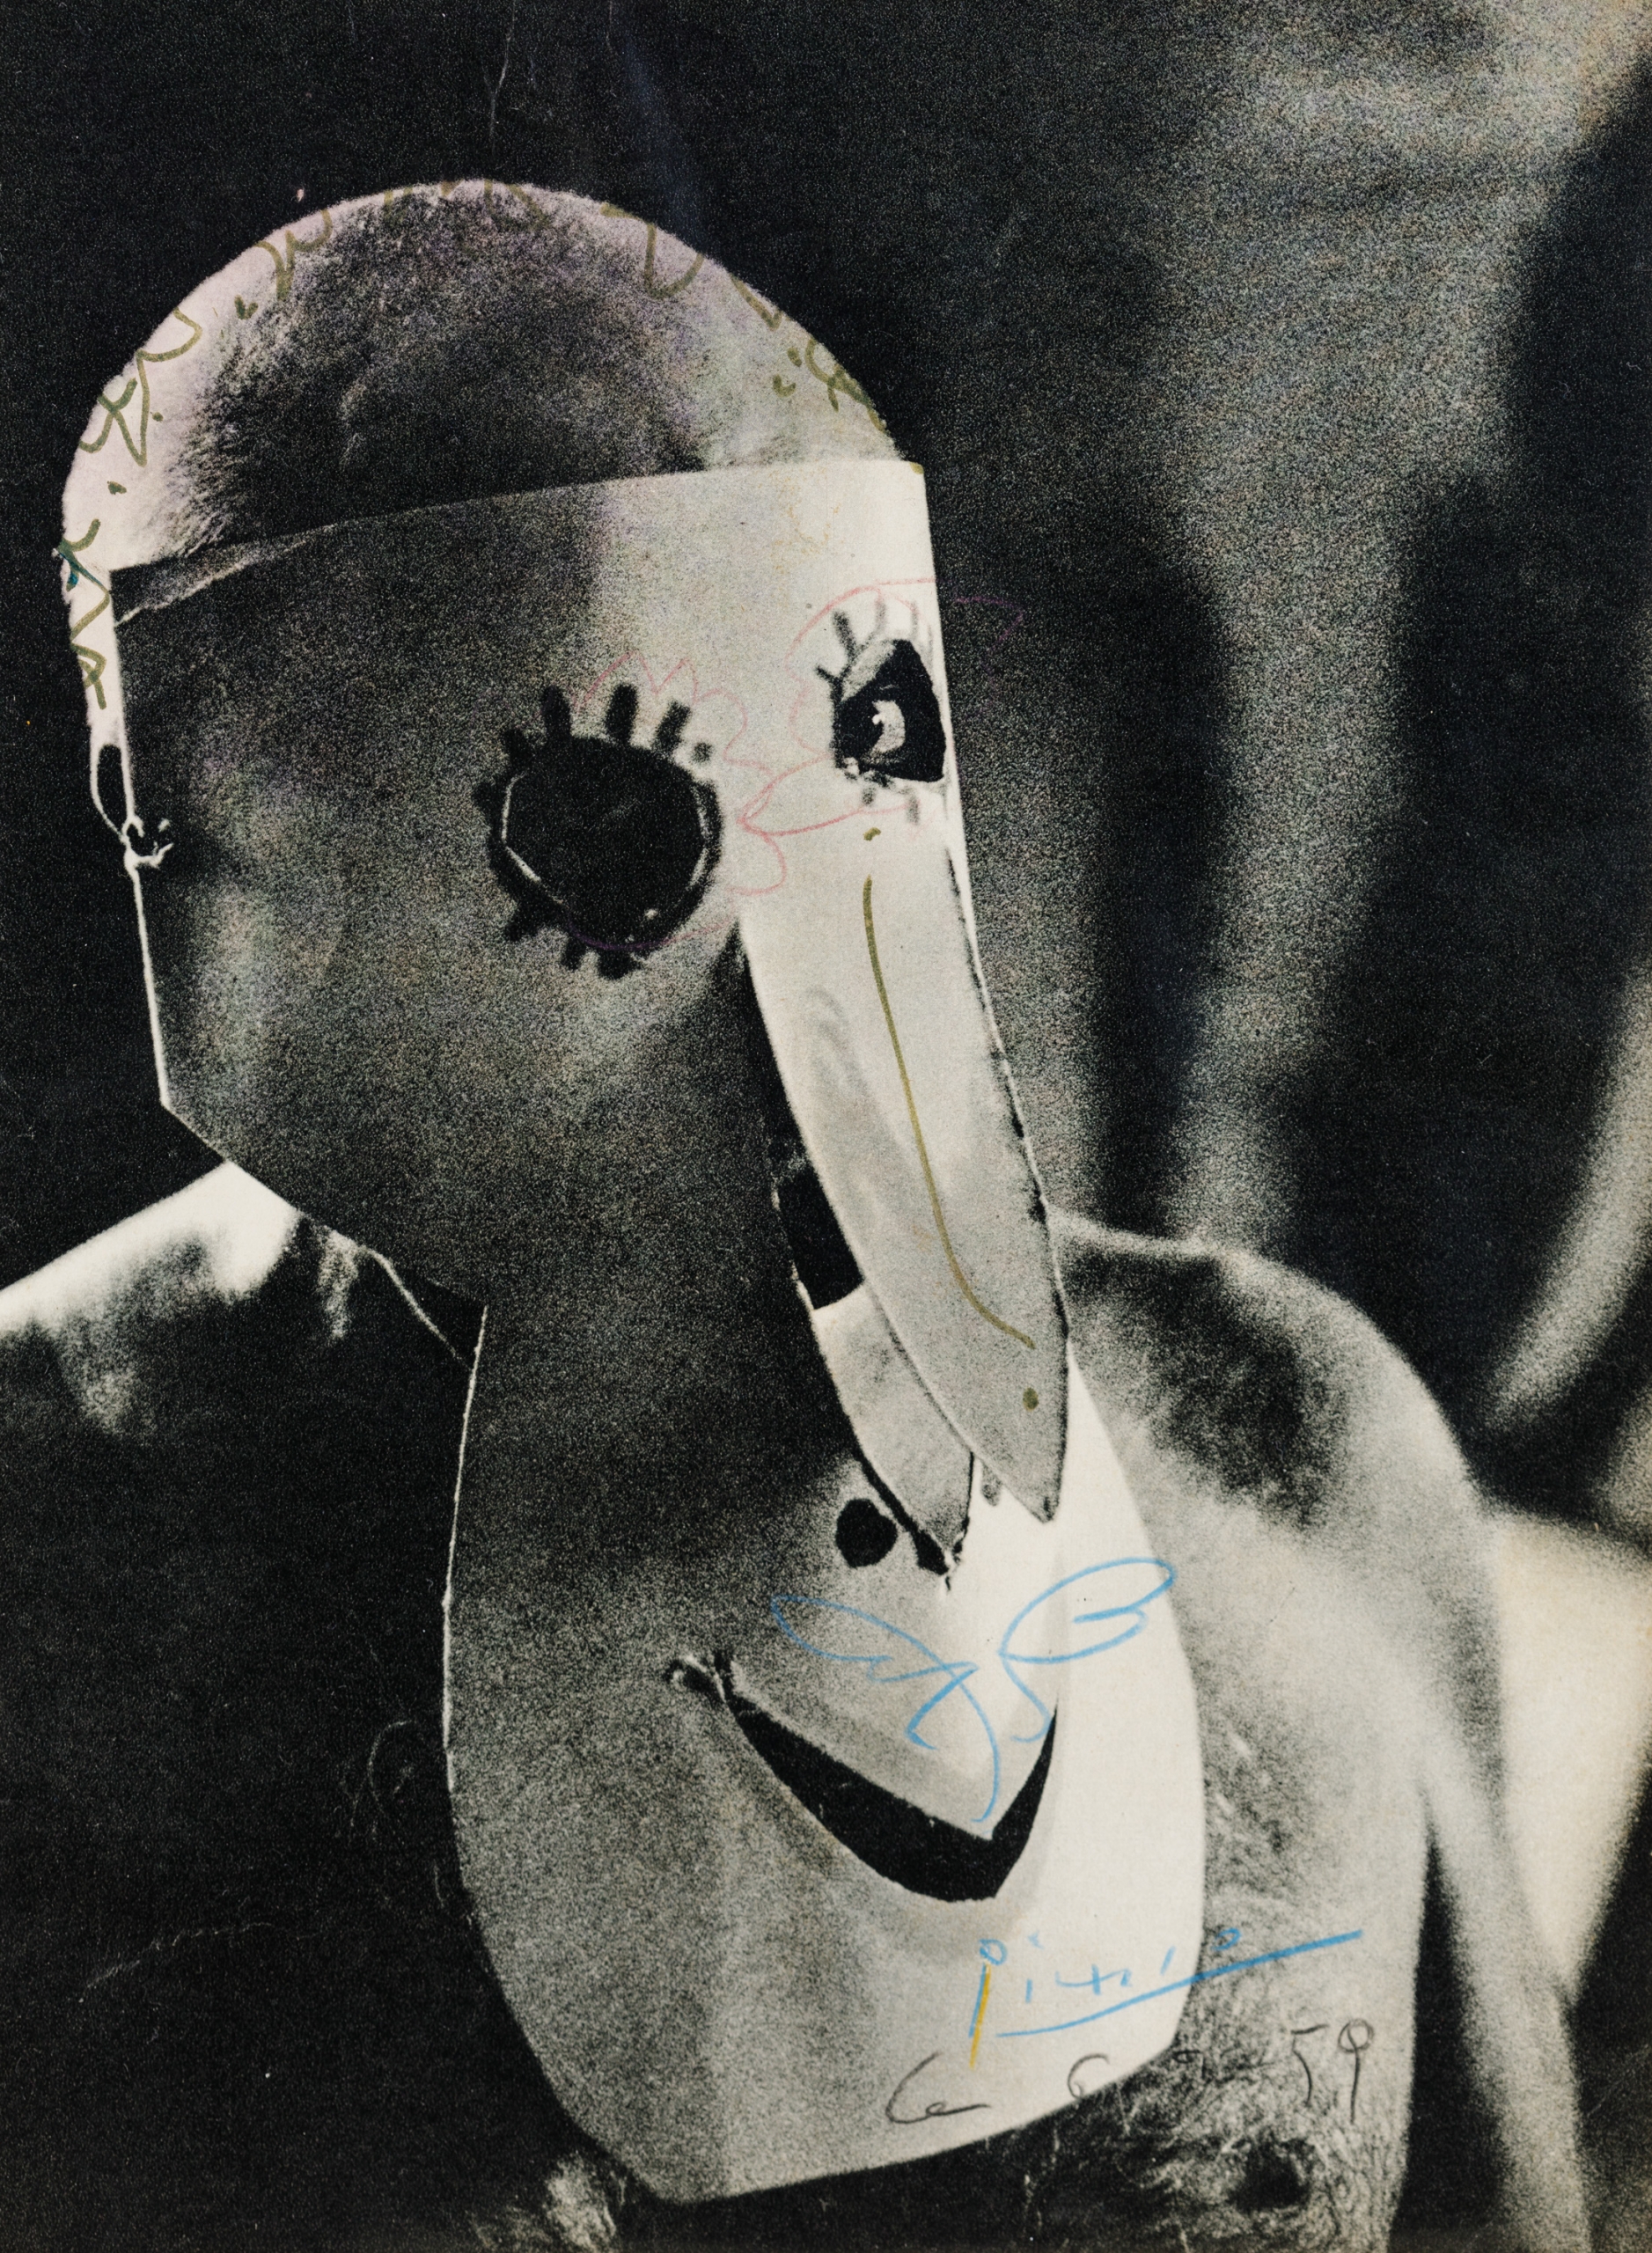 Pablo Picasso / David Douglas Duncan, Picasso mit Grand masque